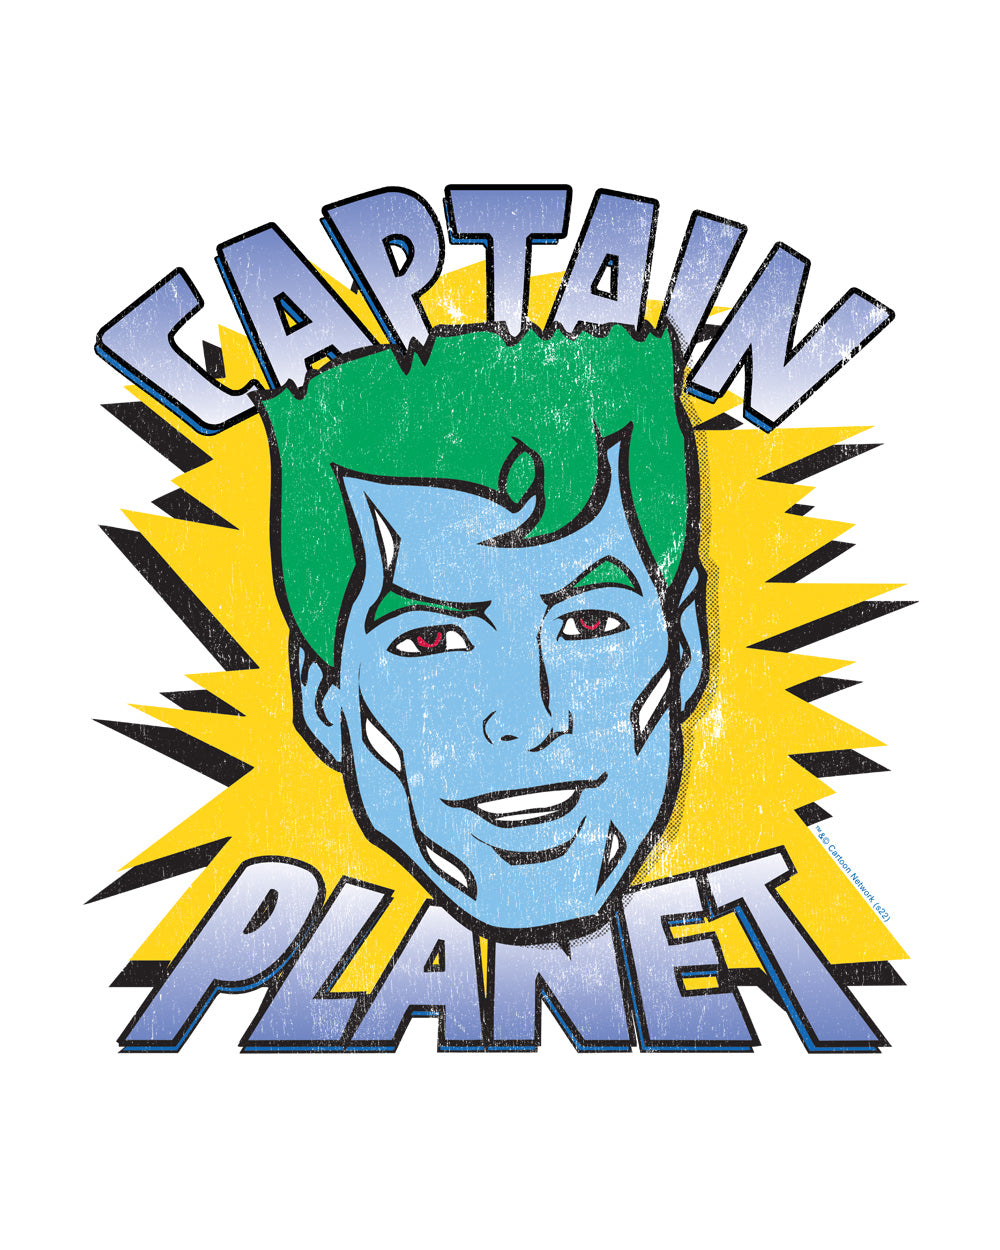 Captain Planet Officially Licensed Retro Vintage 90s Superhero Cartoon Cotton T-Shirt